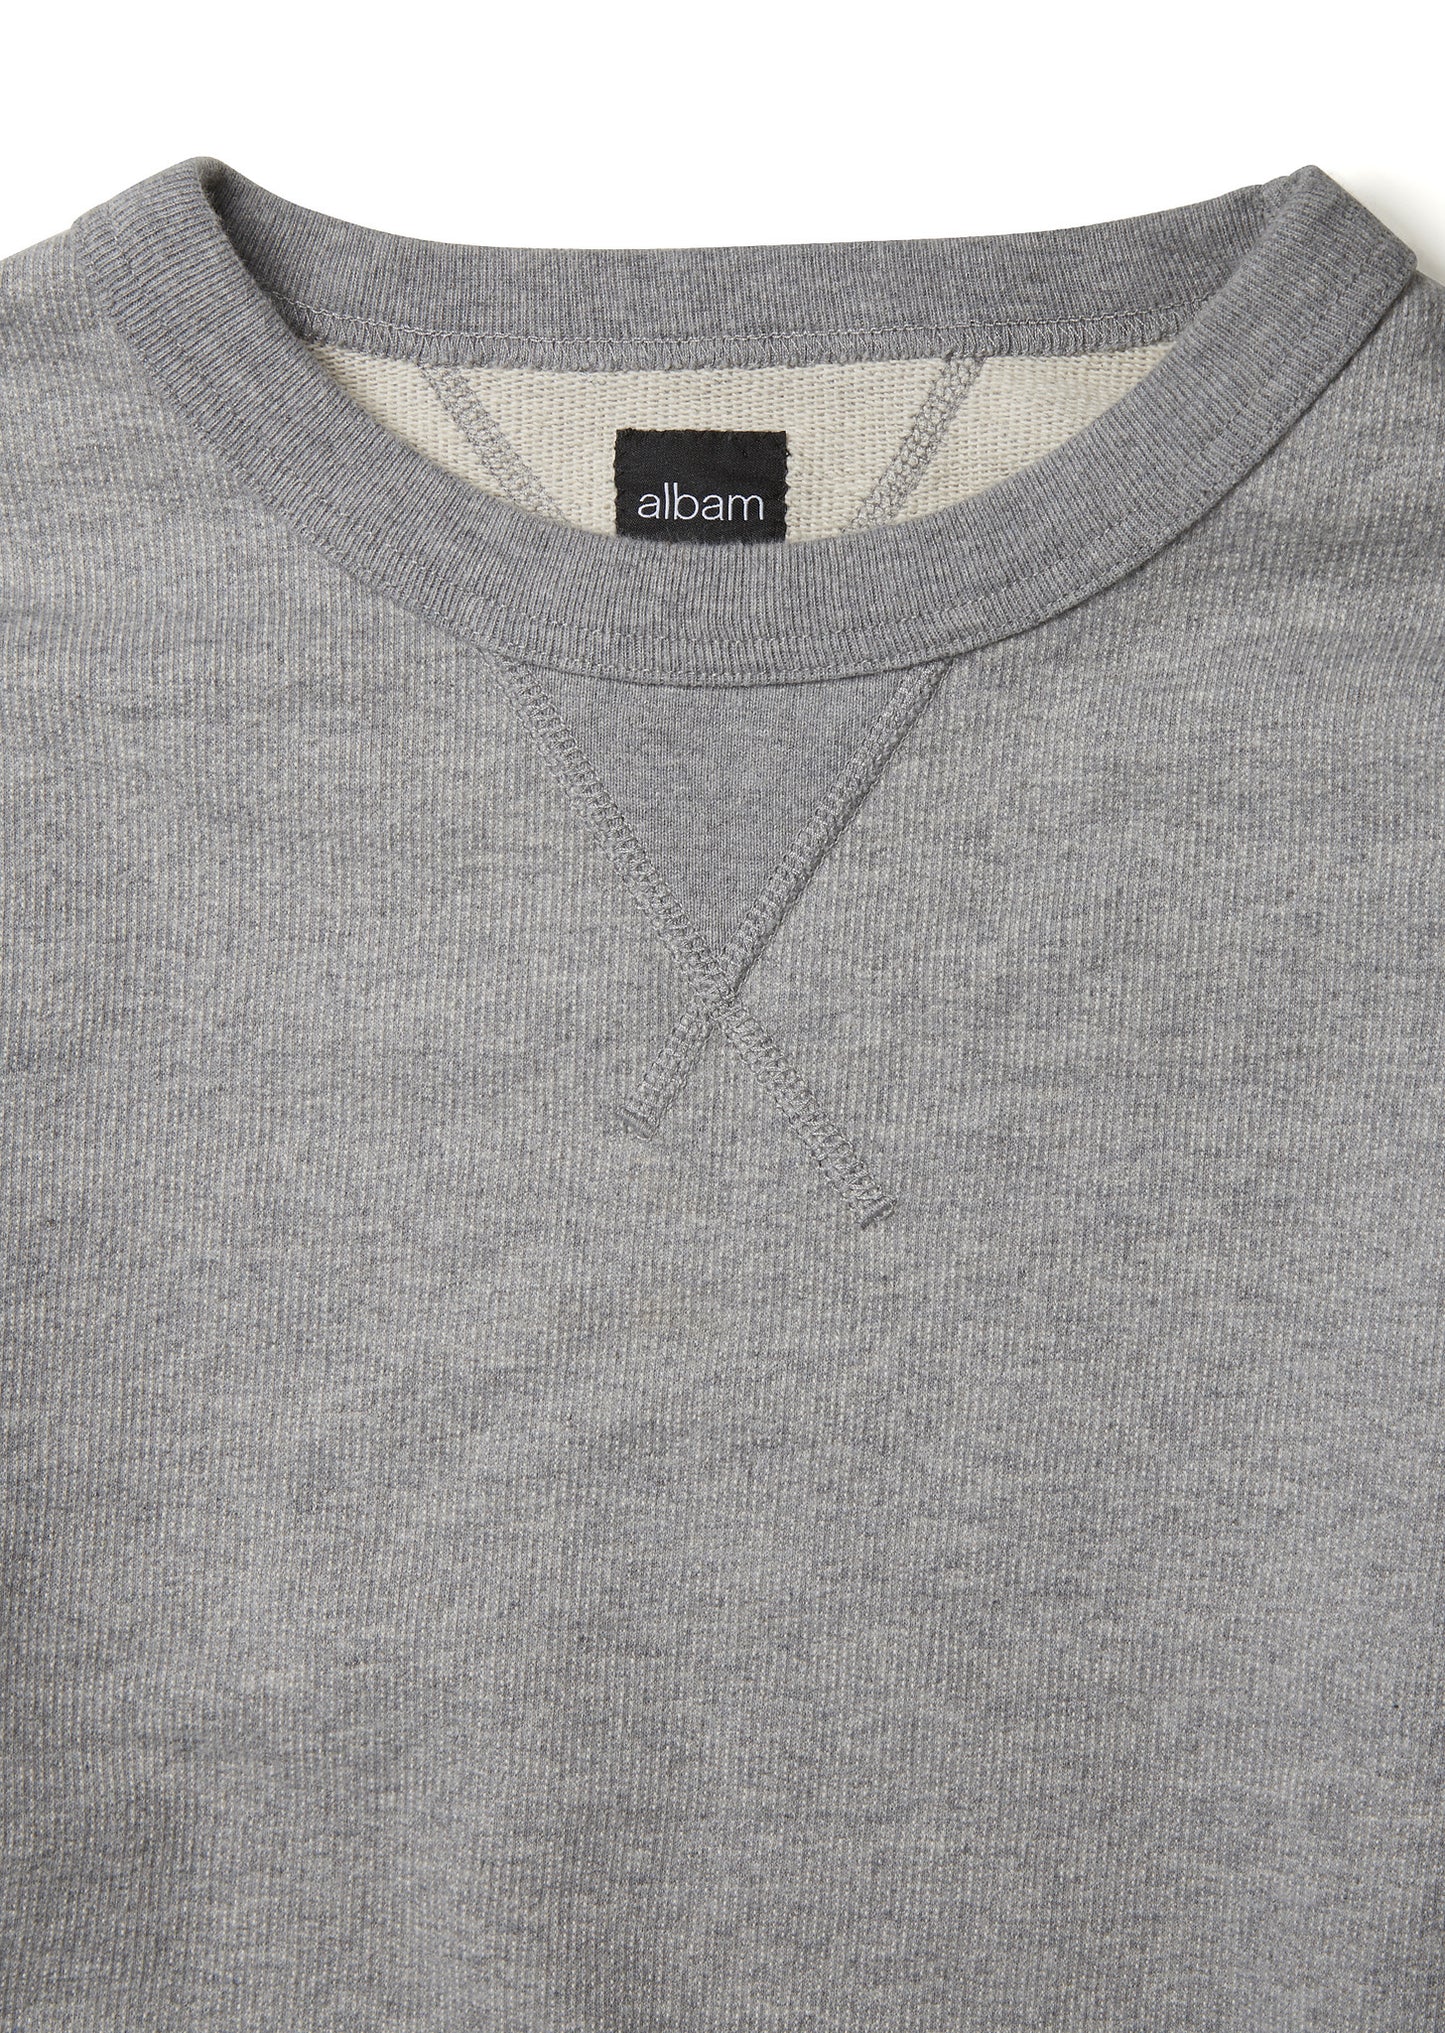 Sweatshirt in Grey Marl